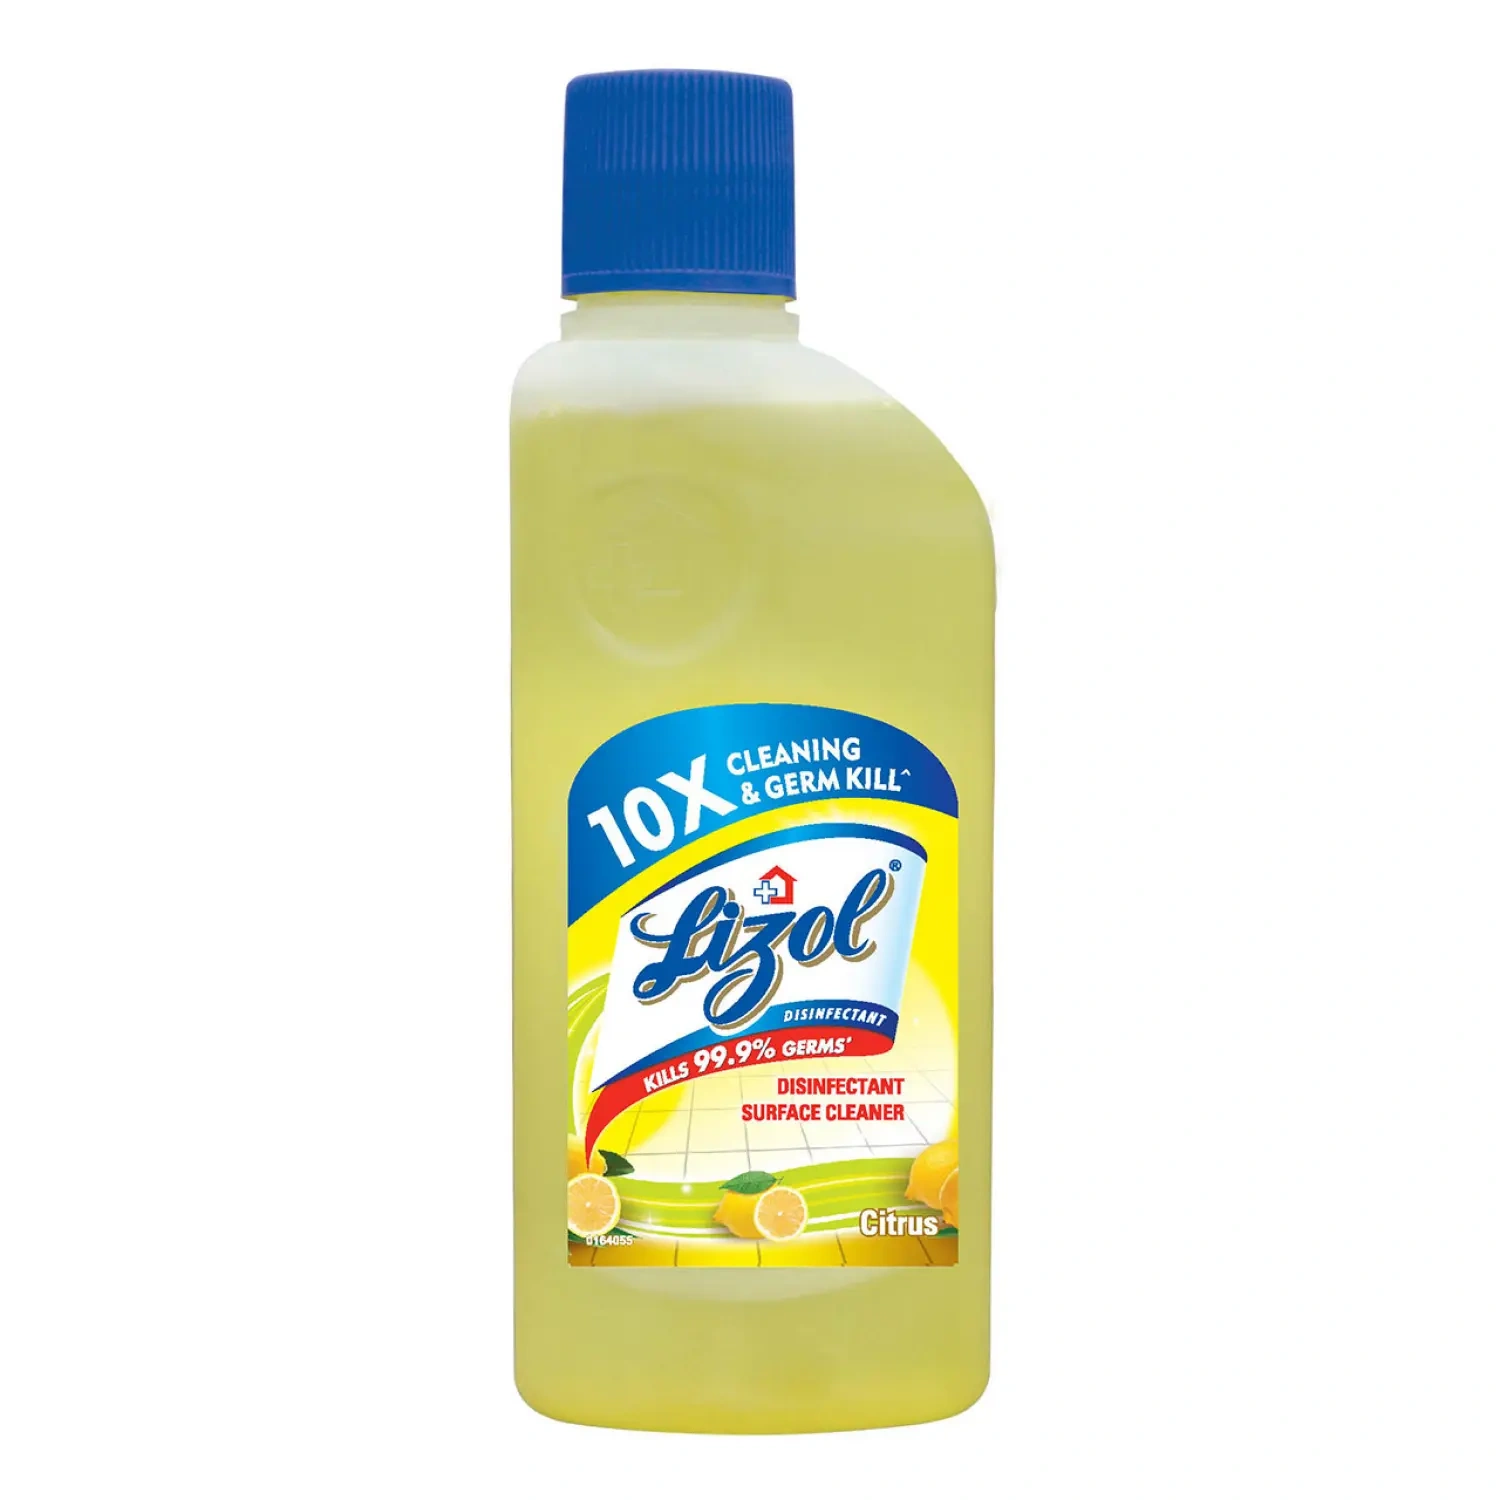 Lizol Disinfectant Surface Cleaner Citrus-Lizol-1116-200ml